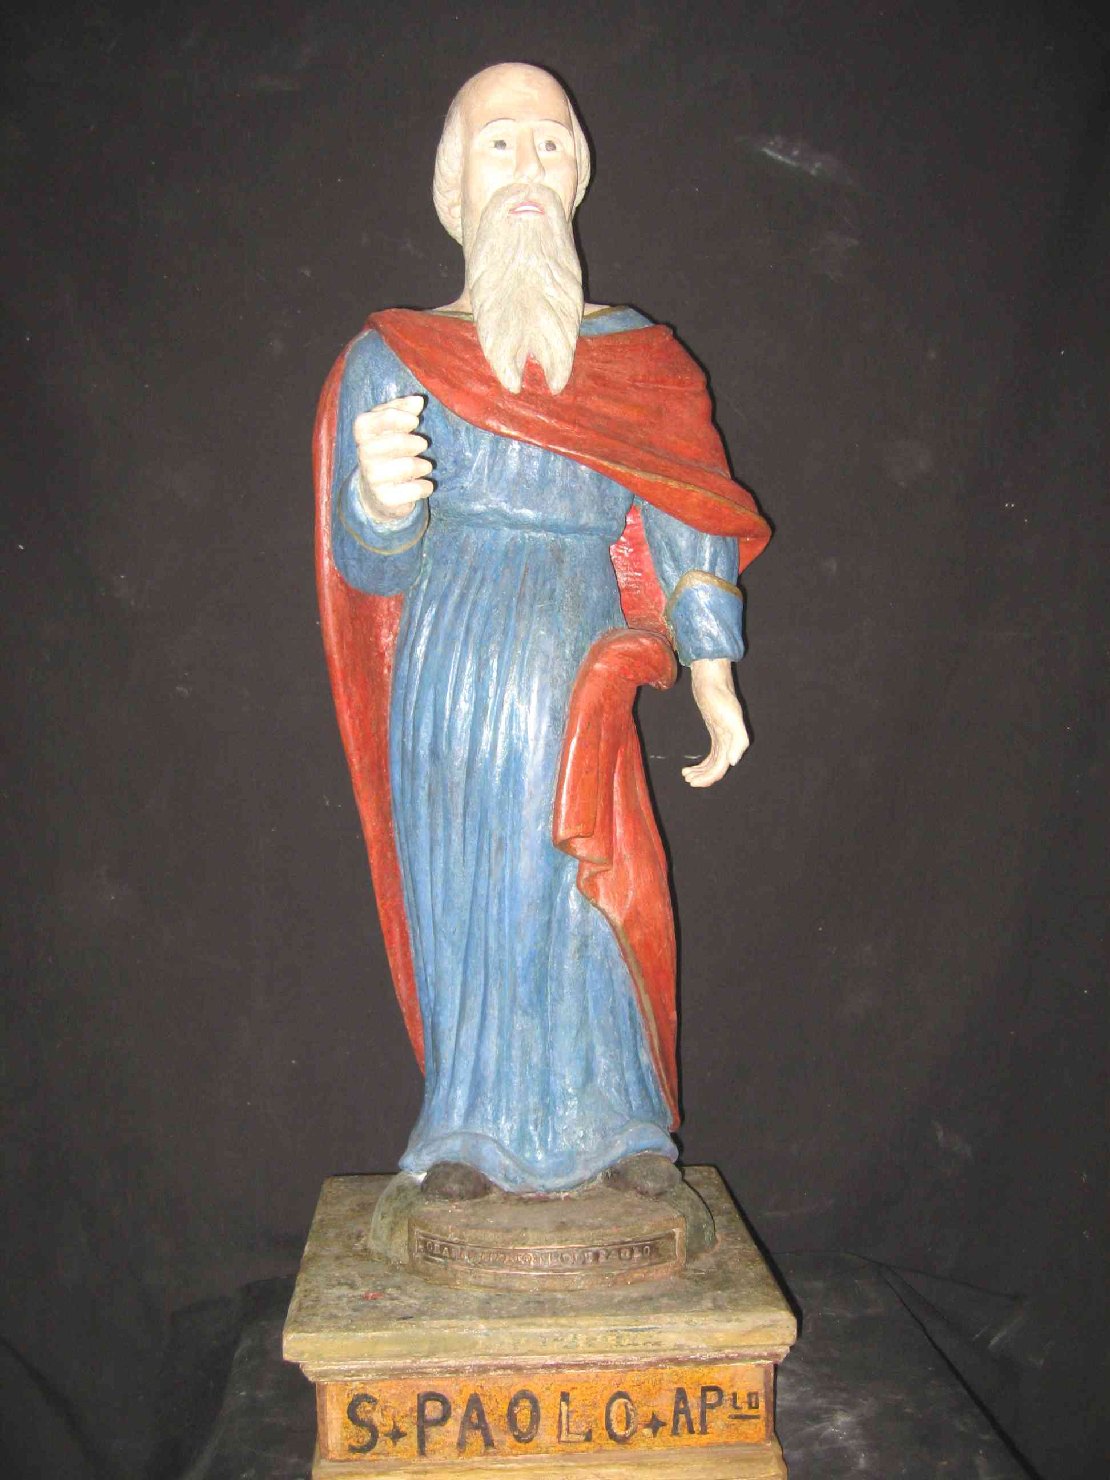 San paolo apostolo (statua)